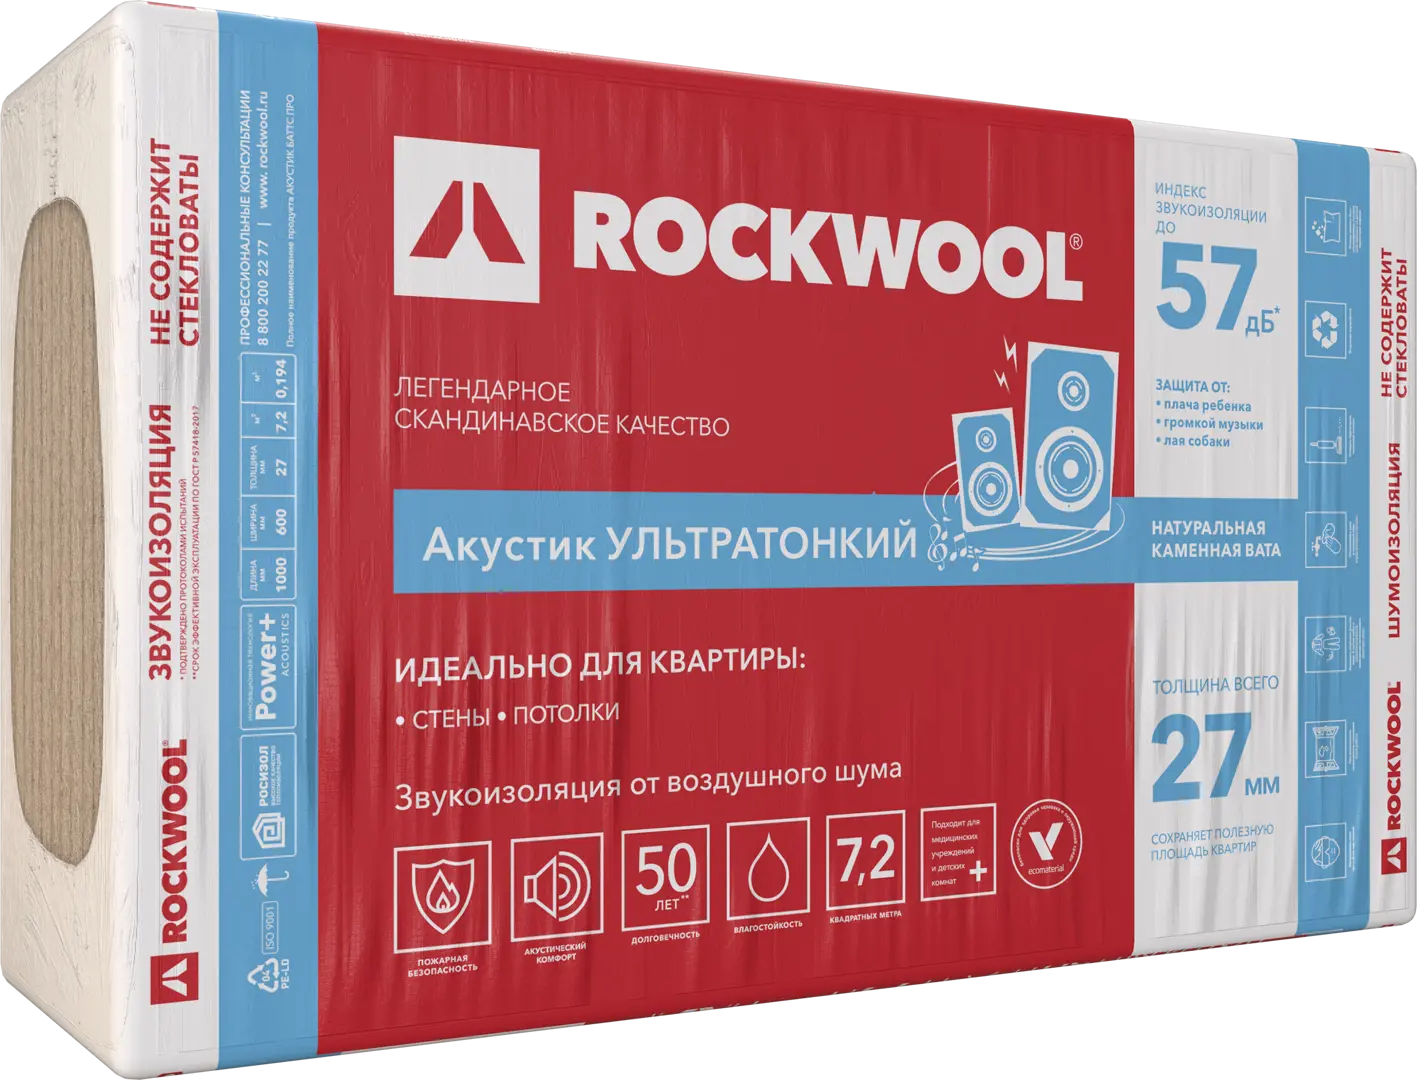 Звукоизоляция Rockwool Акустик ультратонкий 27 мм 7.2 м?